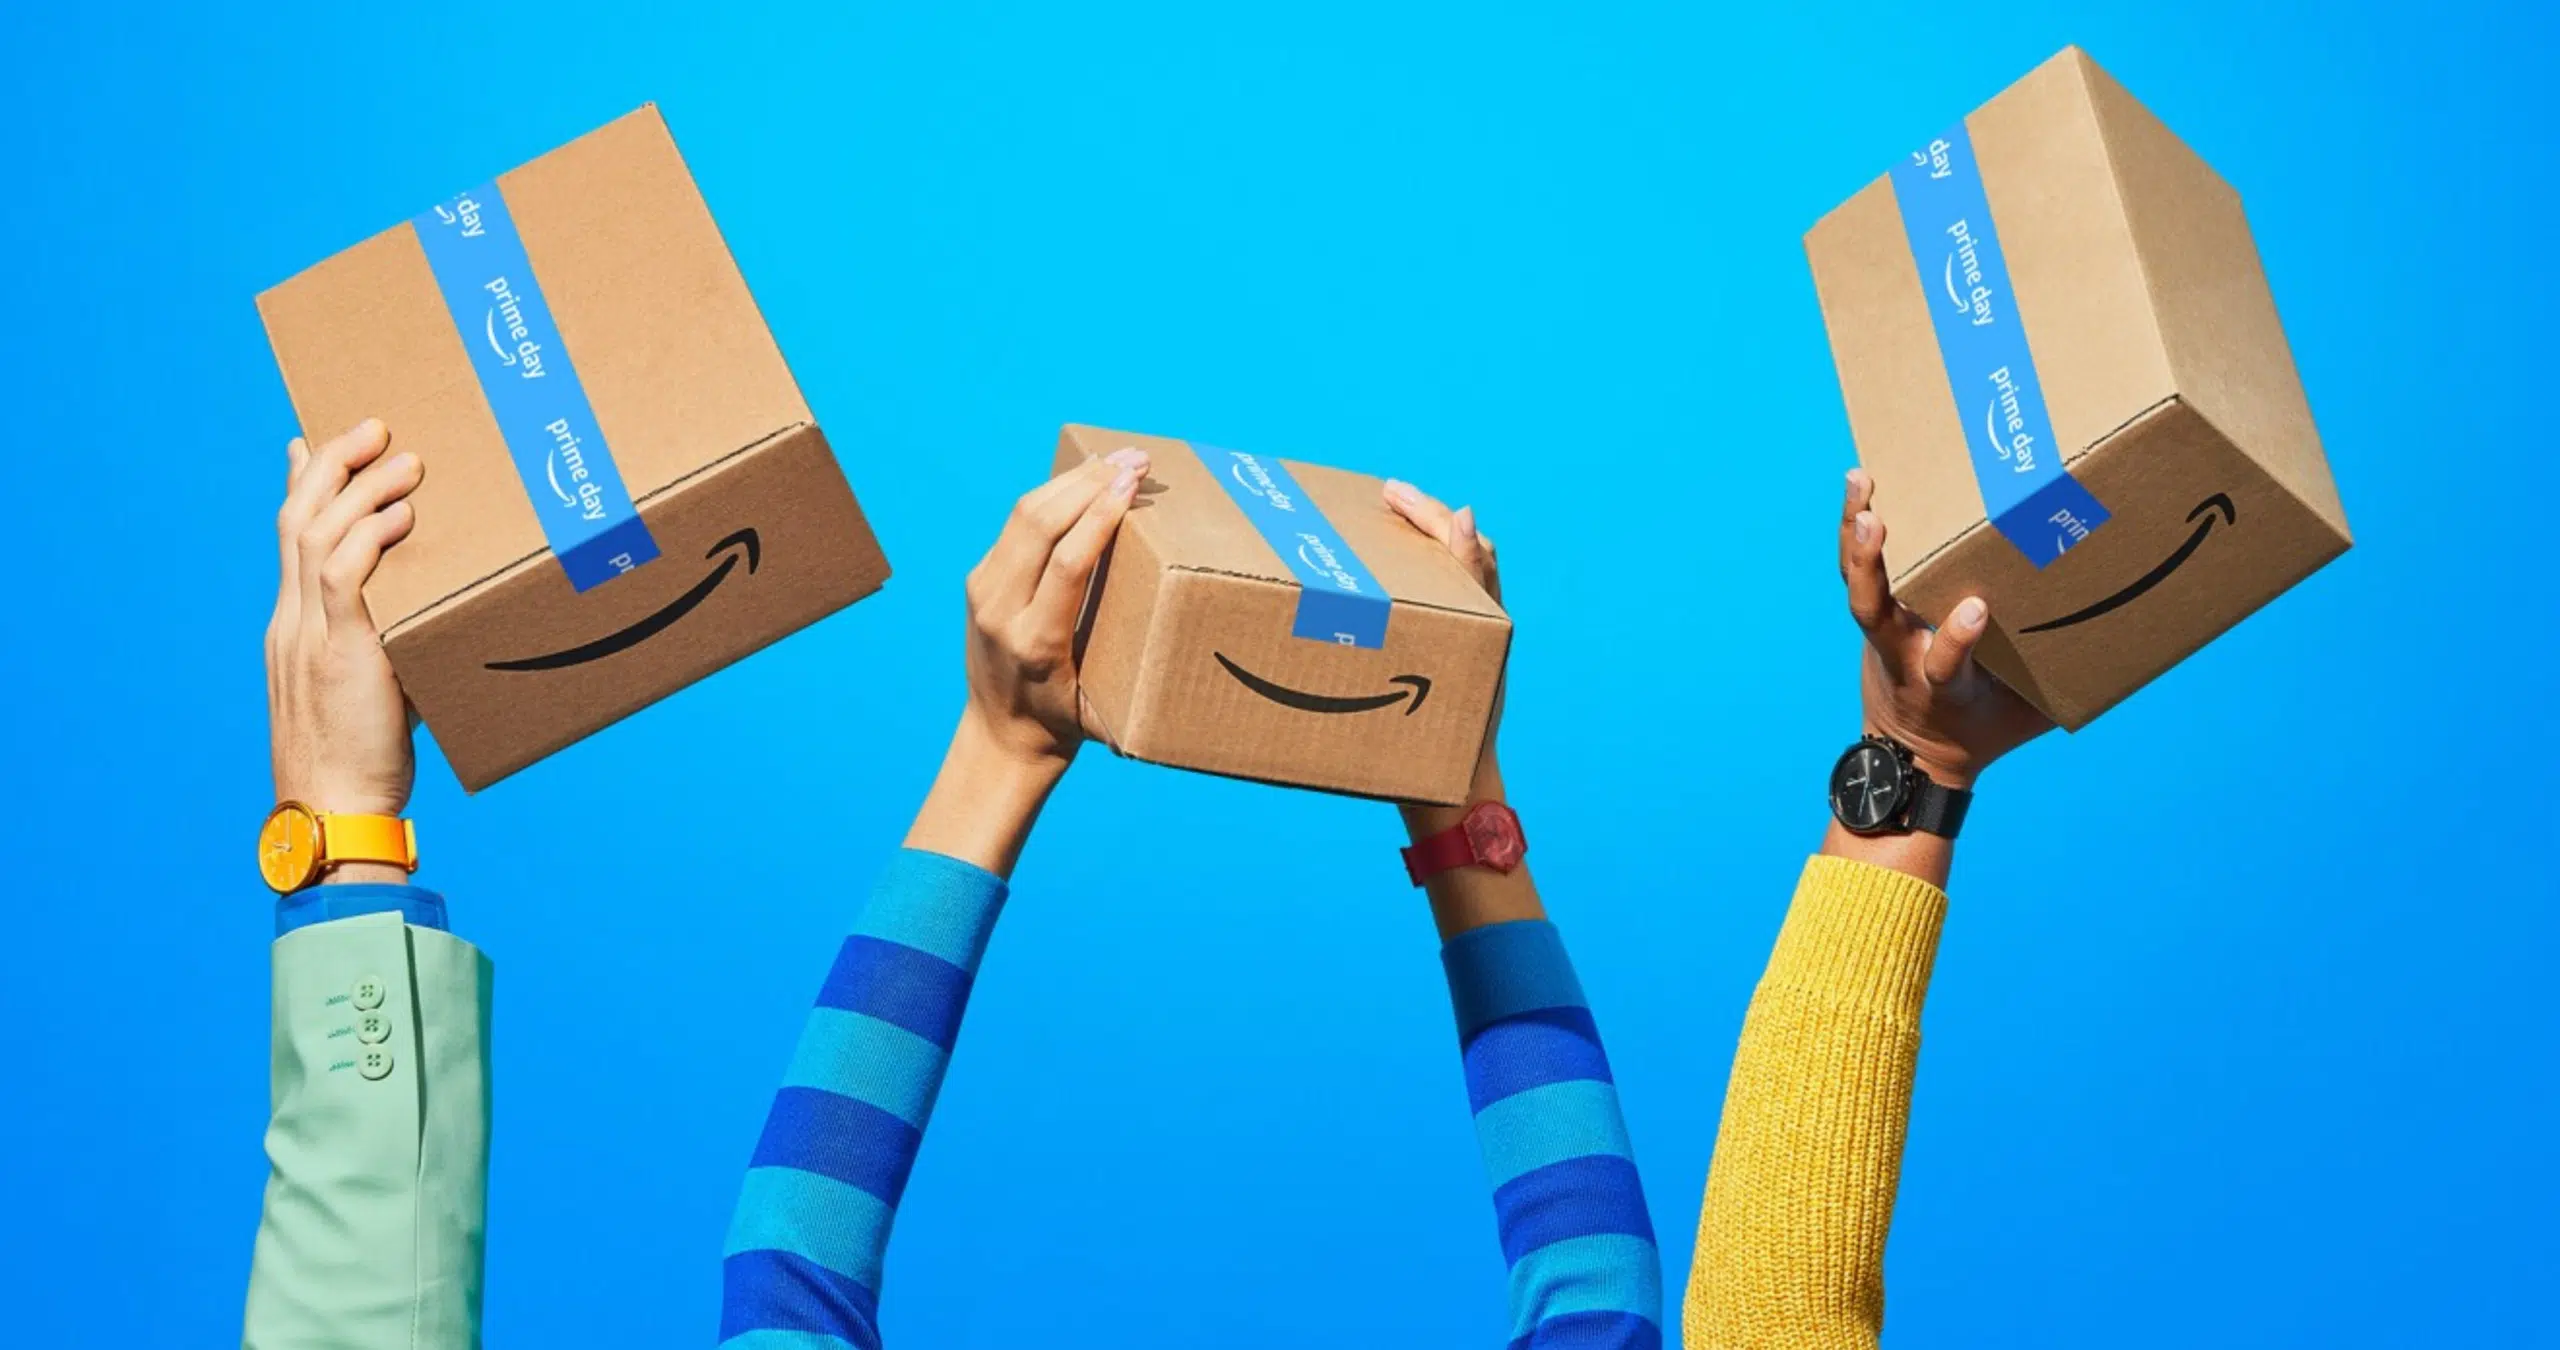 Amazon Silently Increases Amazon Prime Subscription Prices